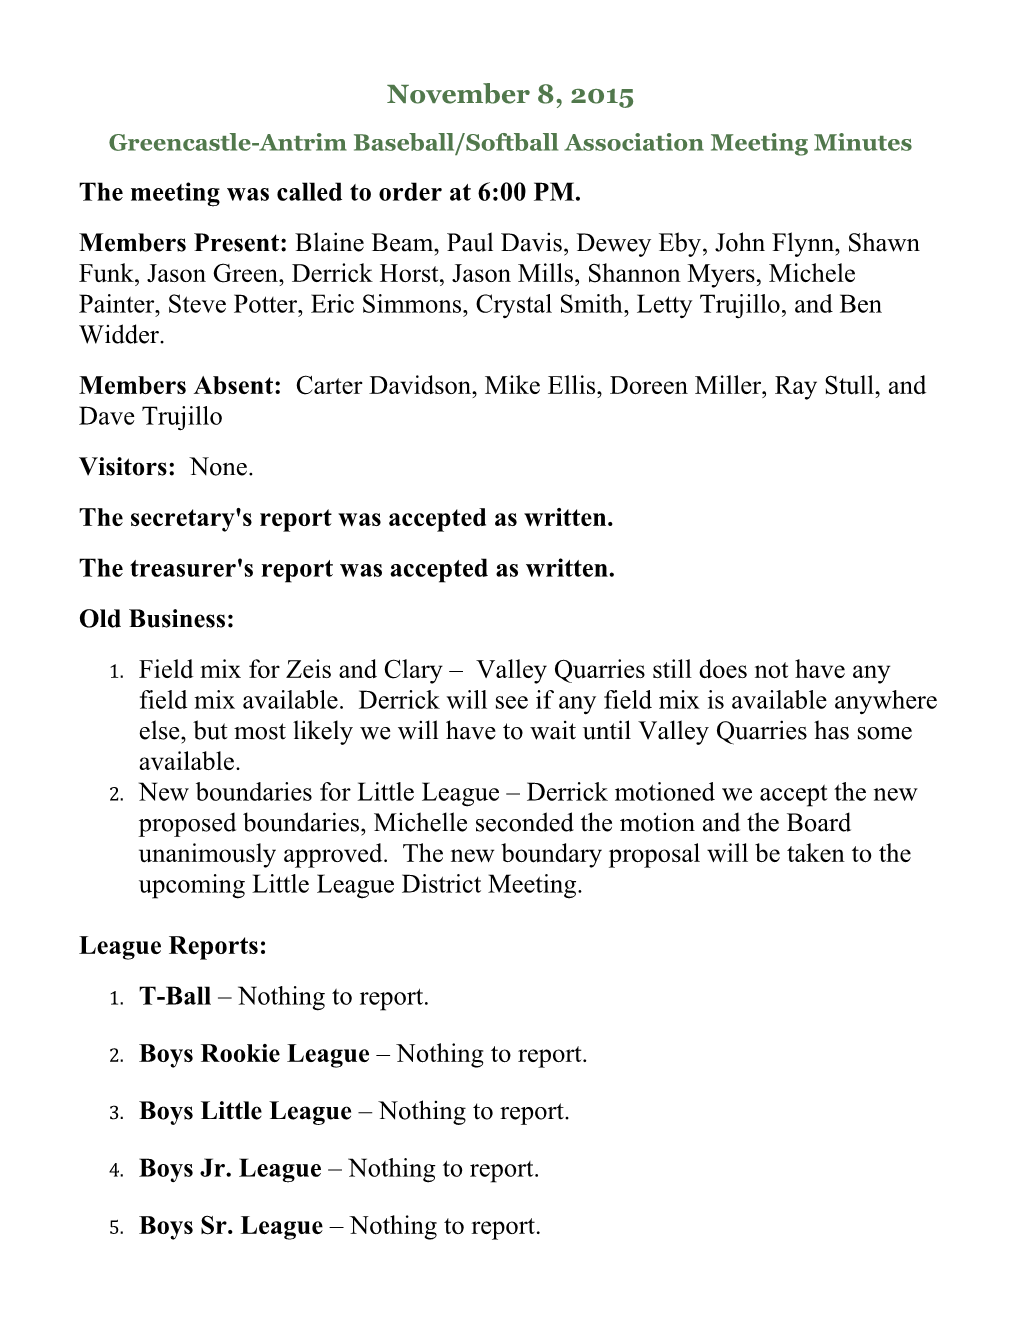 Greencastle-Antrim Baseball/Softball Association Meeting Minutes